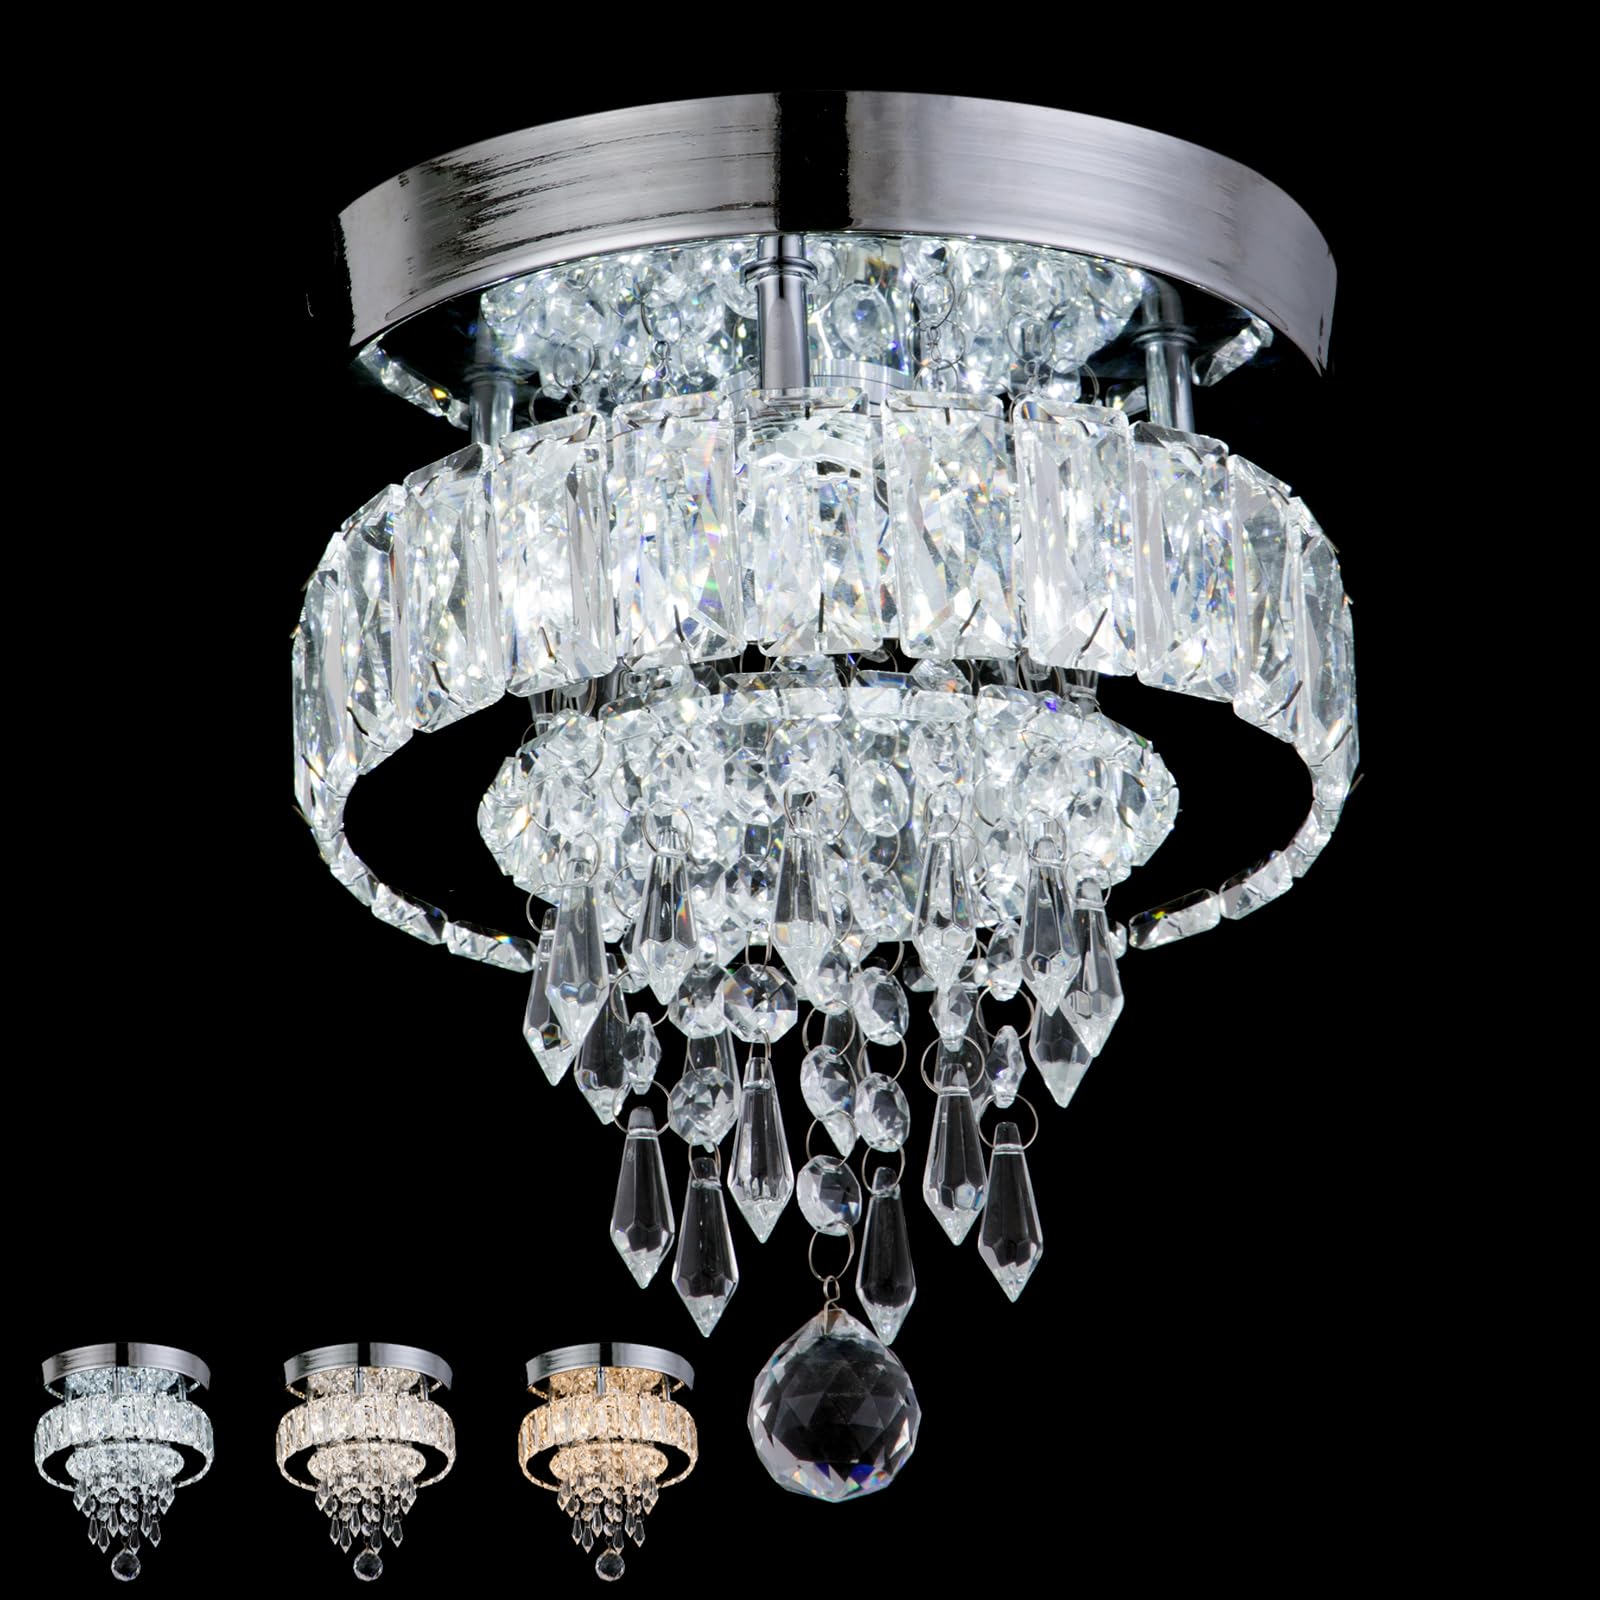 Finktonglan Small Chandeliers, Modern Crystal Chandelier Raindrop Design, Crystal Ceiling Light, H9'' x W8'' Mini Chandeliers for Bedrooms Hallway Kitchen(2700K/4500K/6500K Changeable